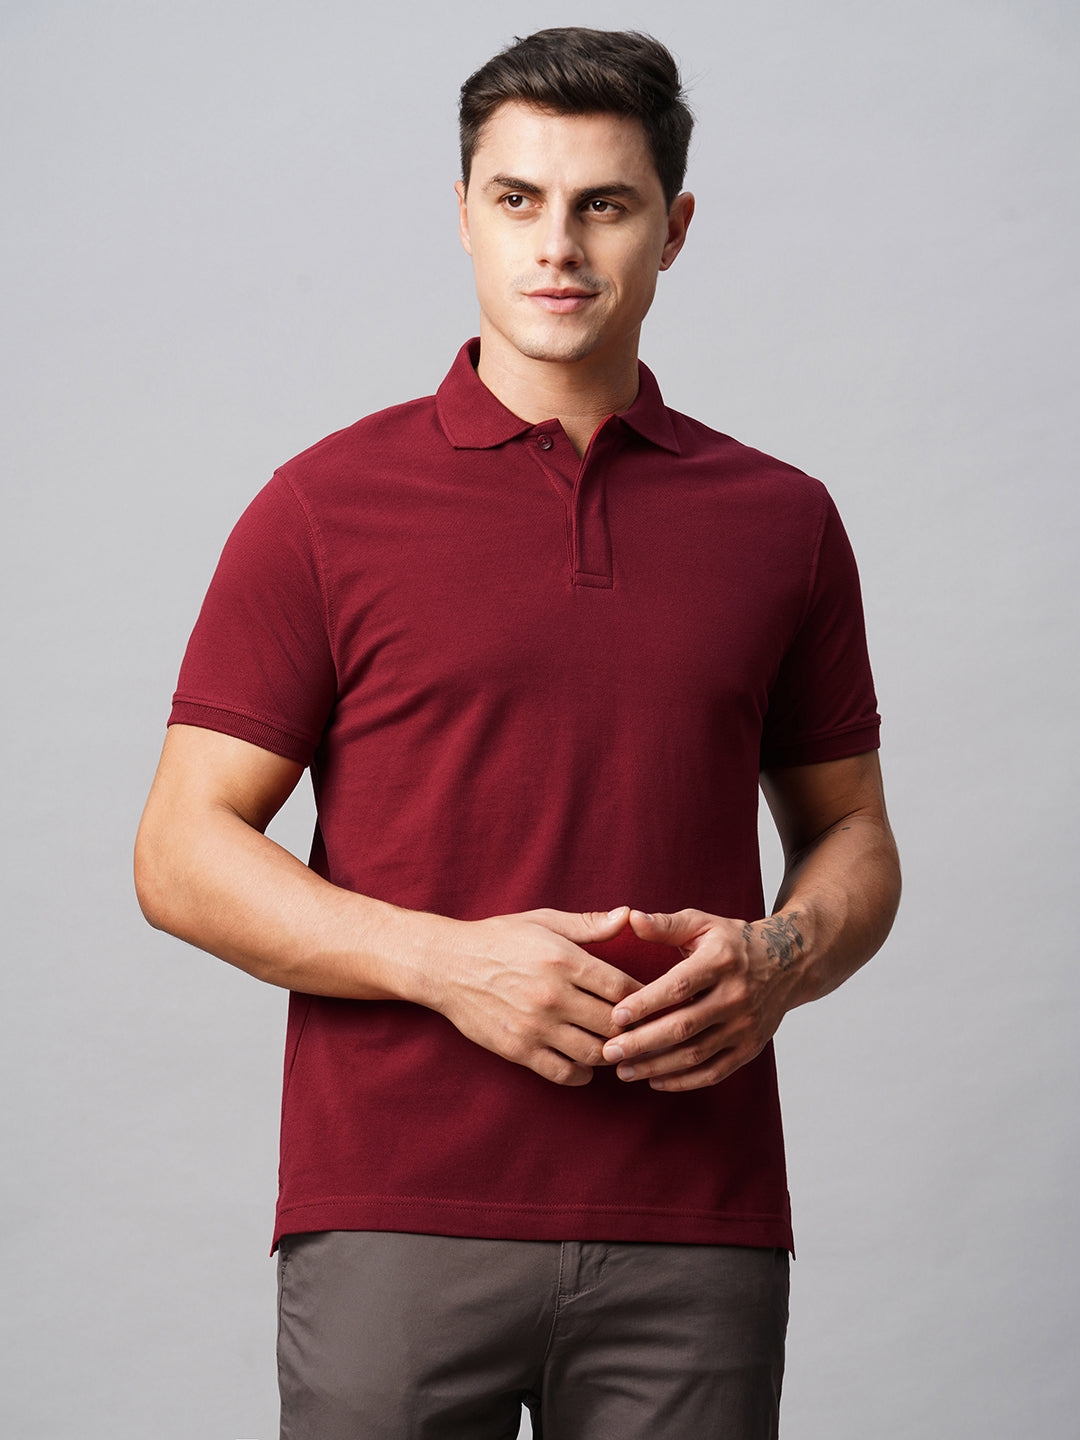 Men's Polo 100% Cotton Dark Red Regular Fit